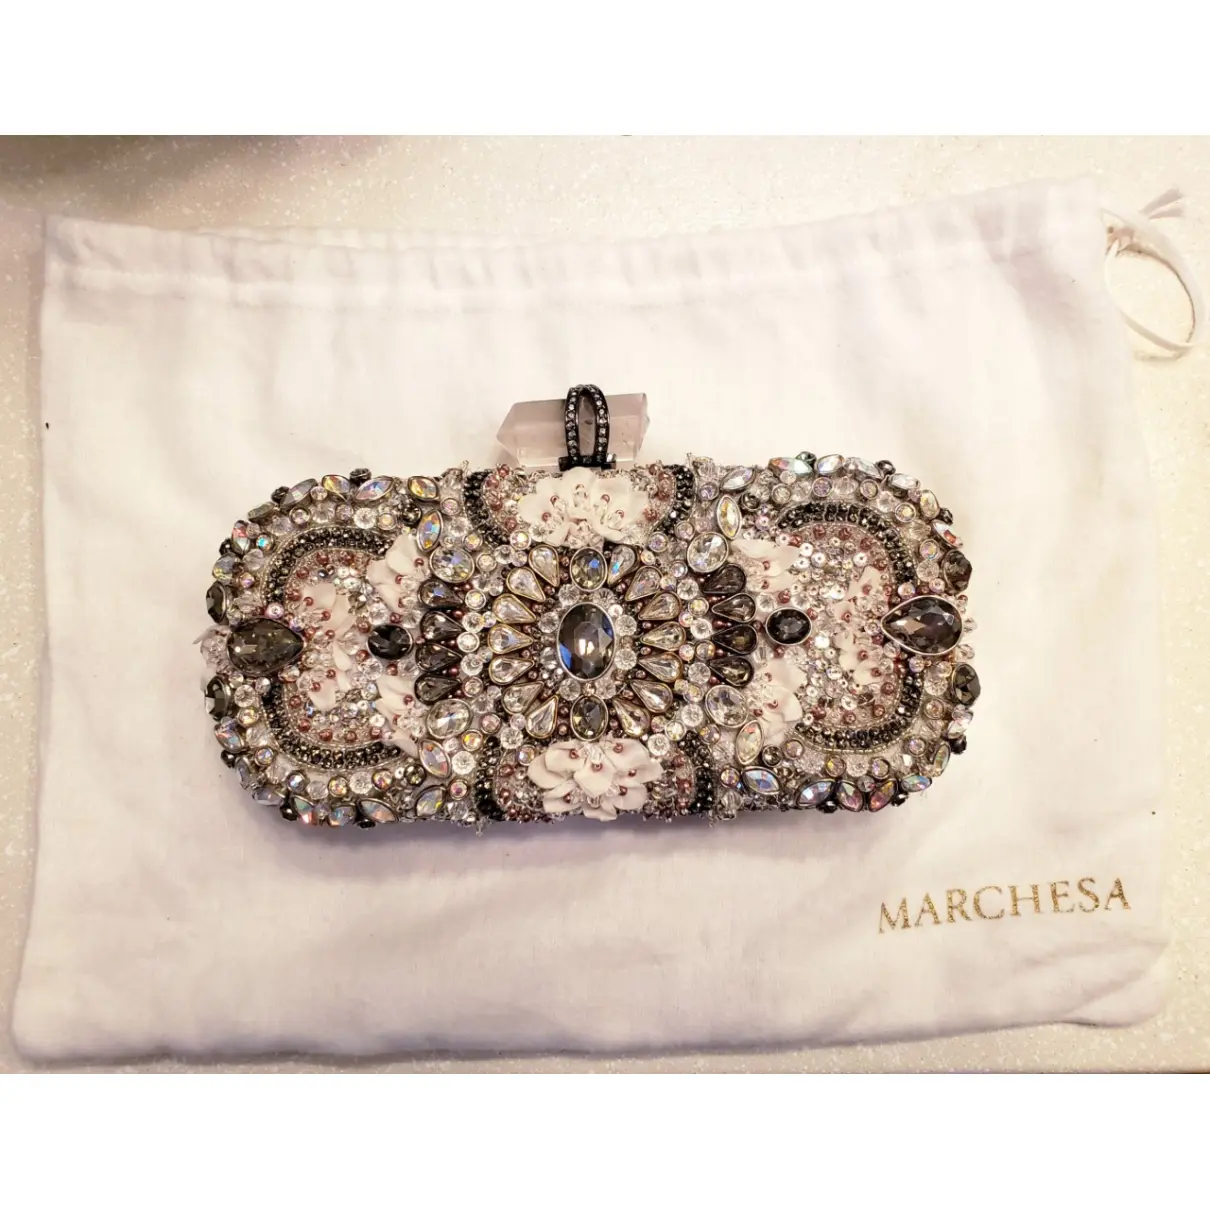 Buy Marchesa Handbag online